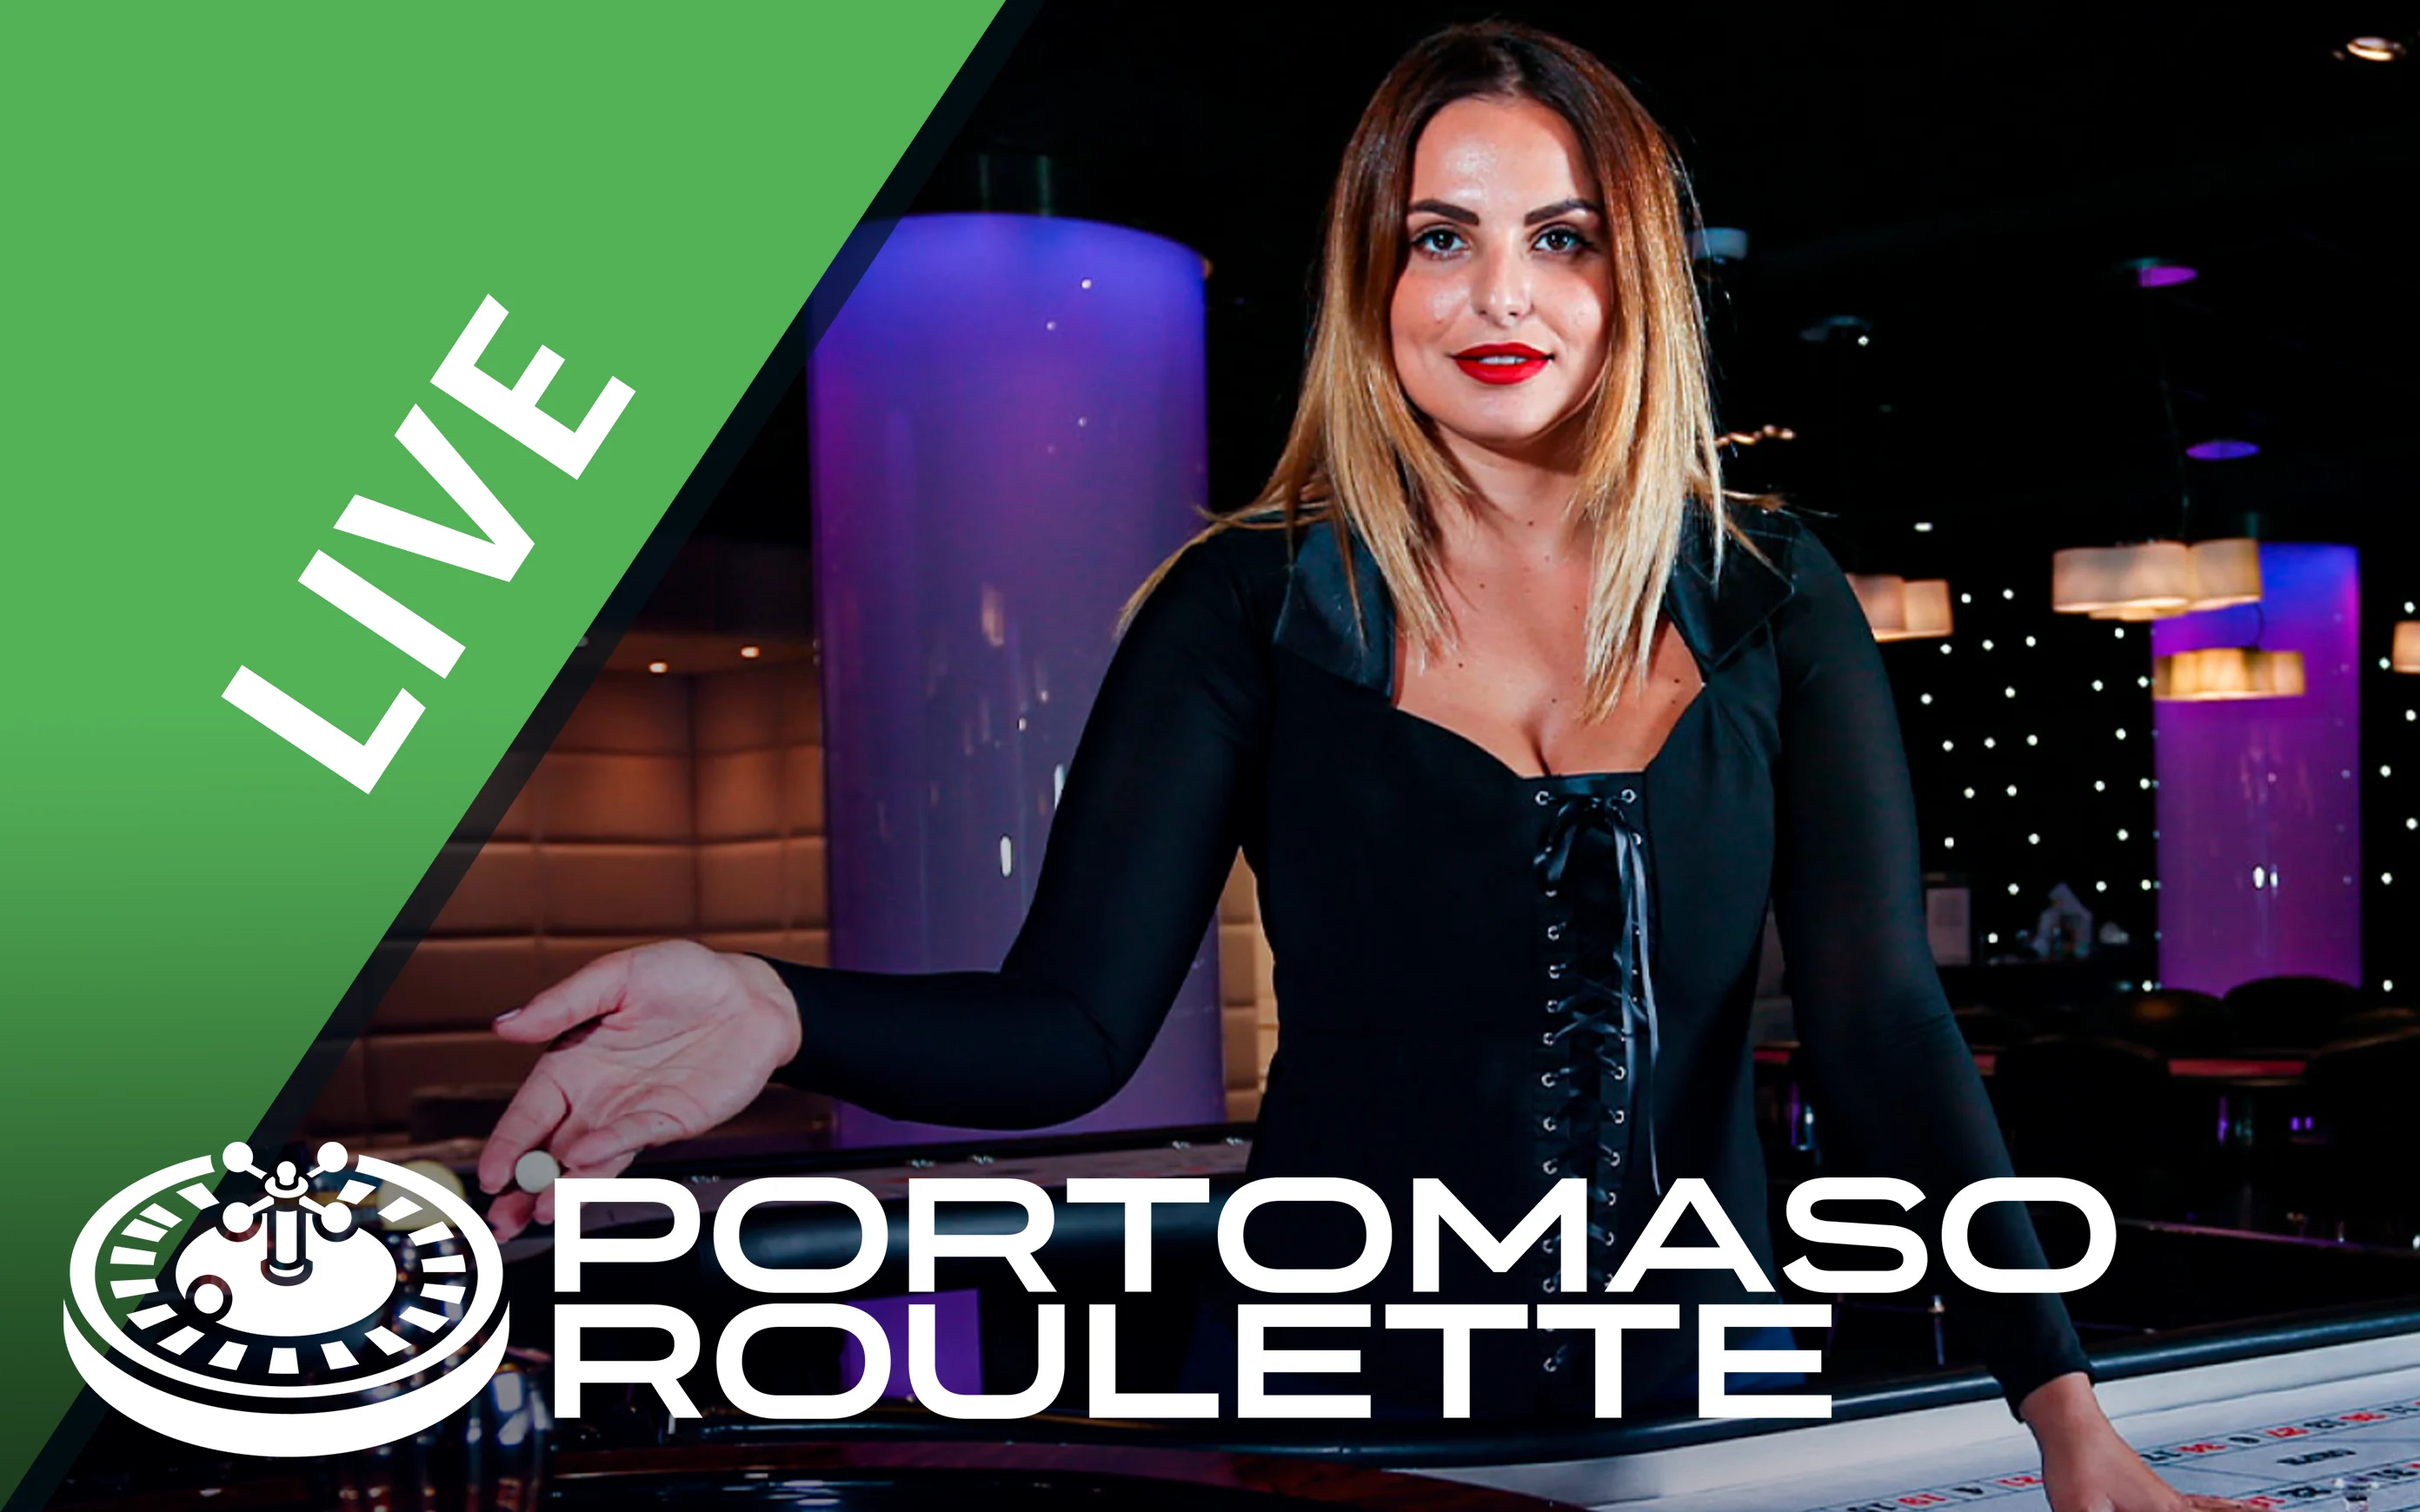 Starcasino.be online casino üzerinden Portomaso Roulette oynayın